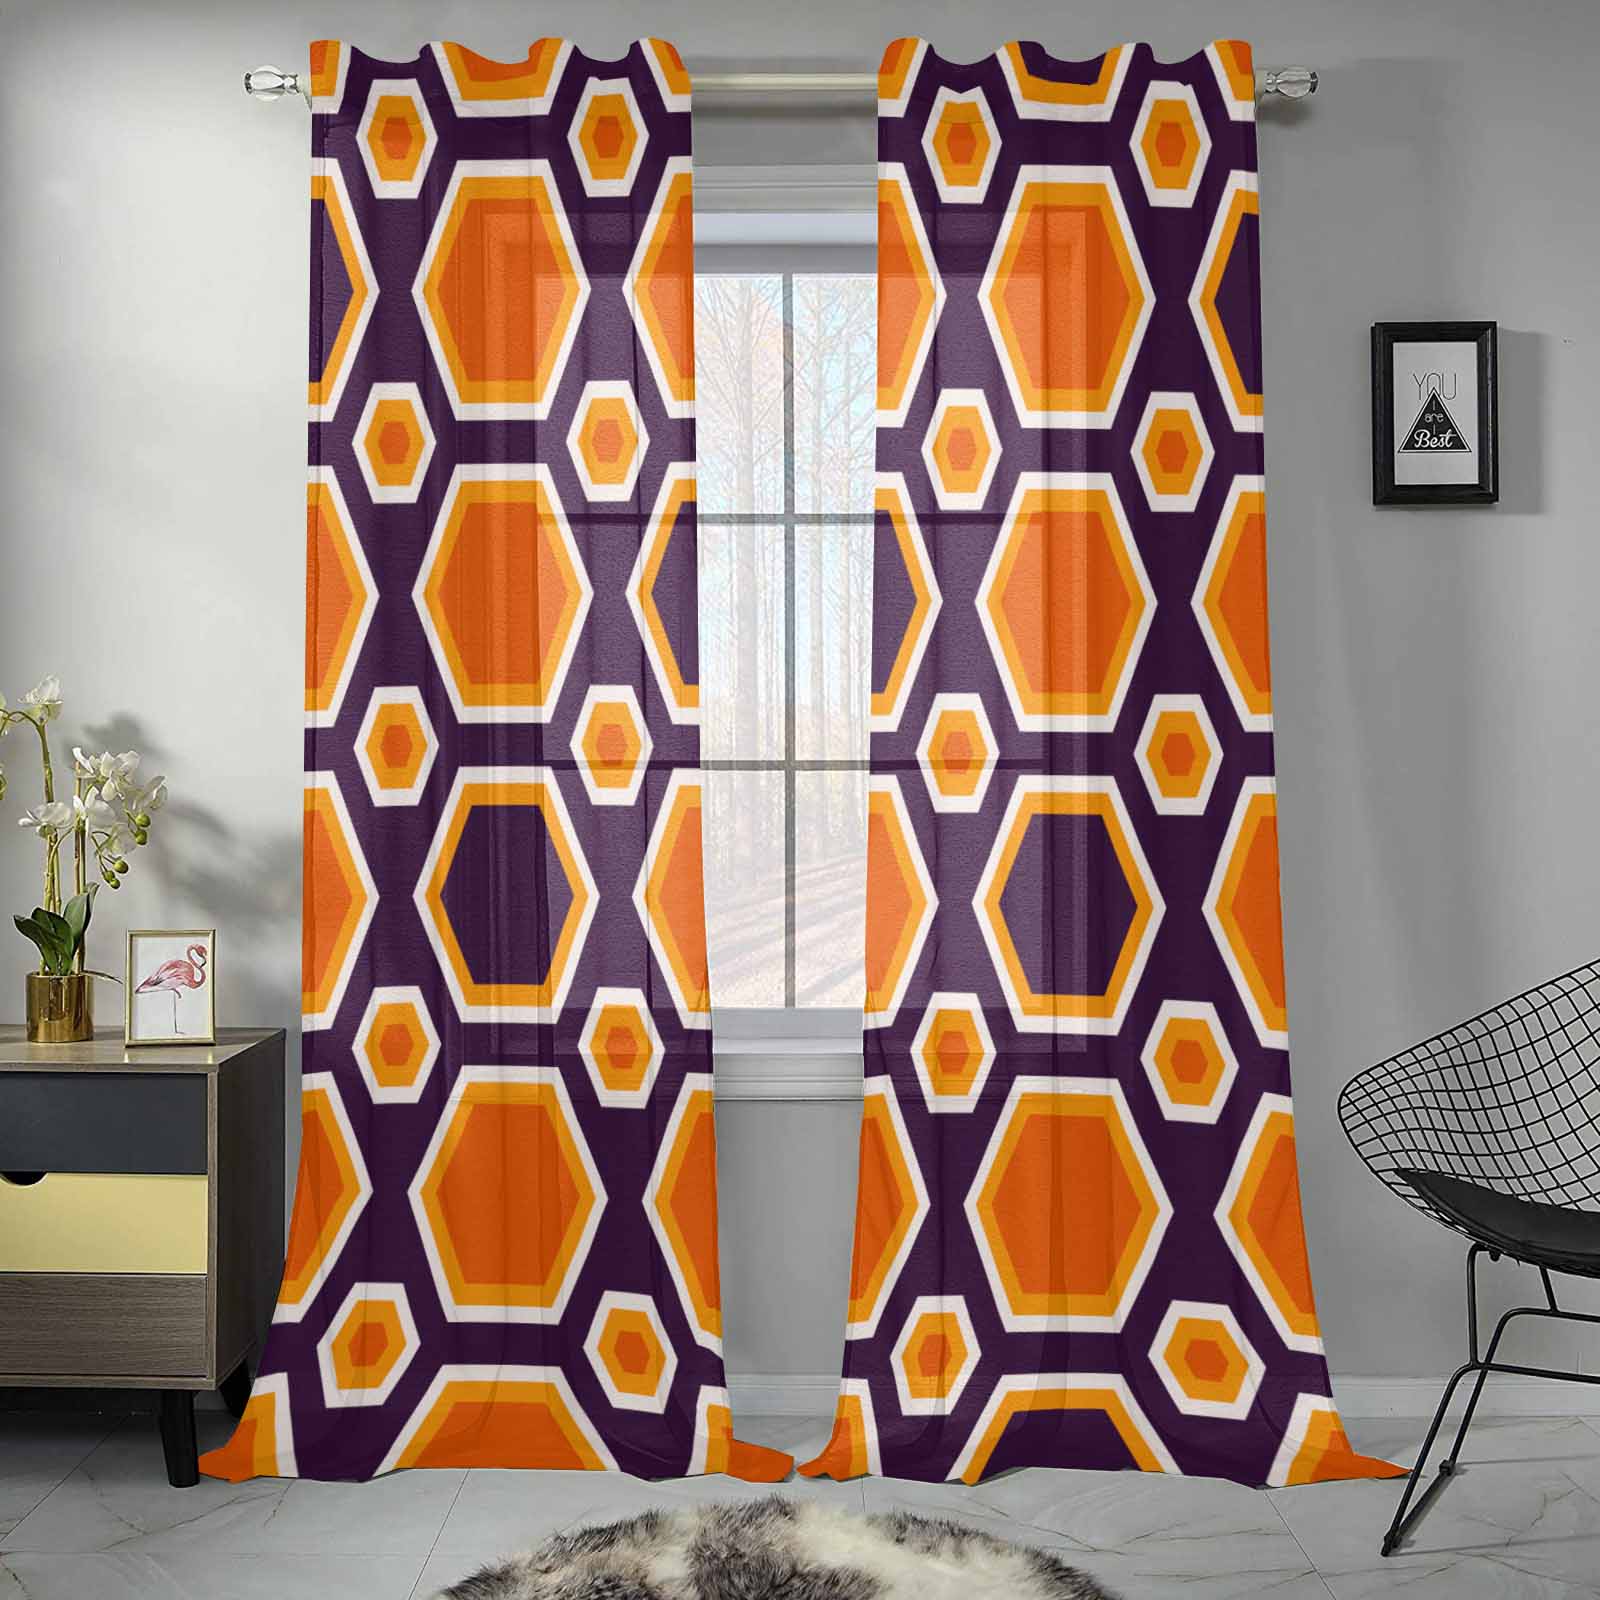 Kate McEnroe New York Sheer 2 - Panel Window Curtains in Mid Century Modern Geometric Halloween OrangeWindow CurtainsDG1169876DXH7858D